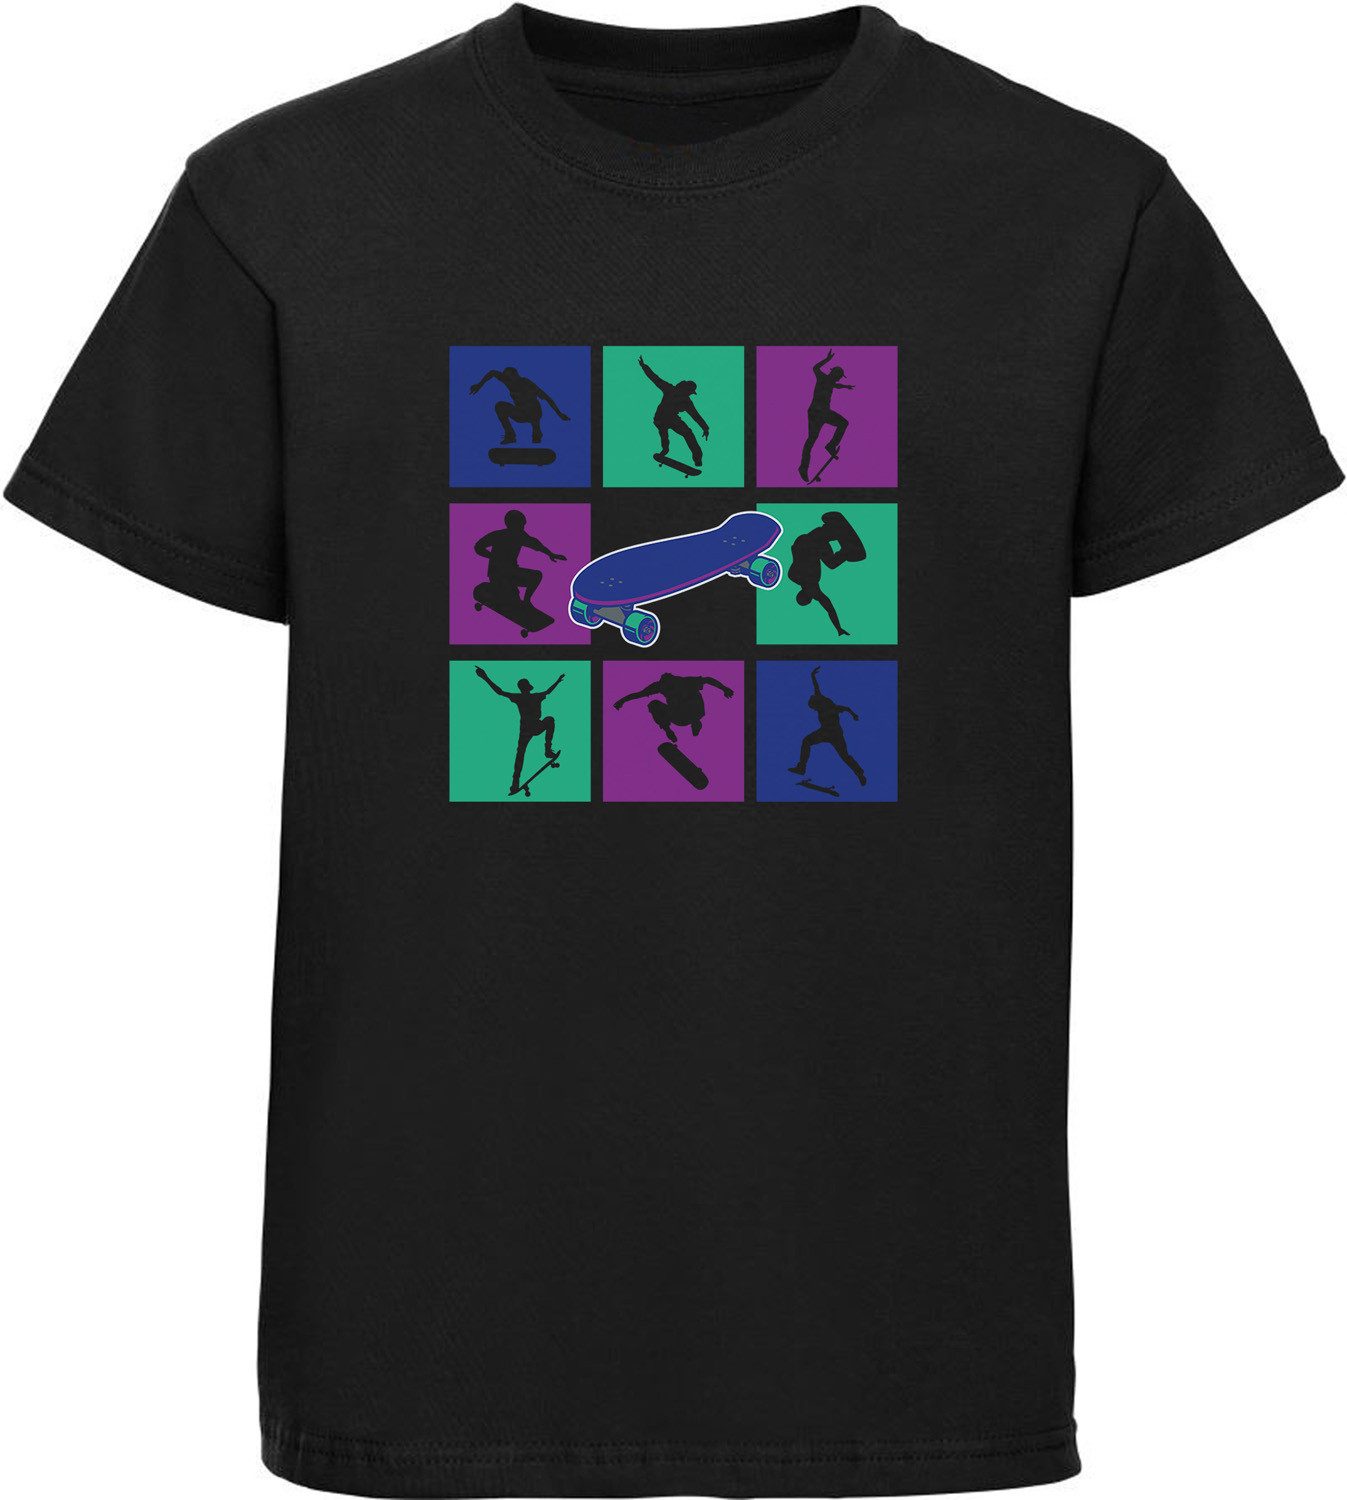 MyDesign24 T-Shirt Kinder Print Shirt Skateboarder Bilder in farbigen cubes Bedrucktes Jungen und Mädchen Skater T-Shirt, i524